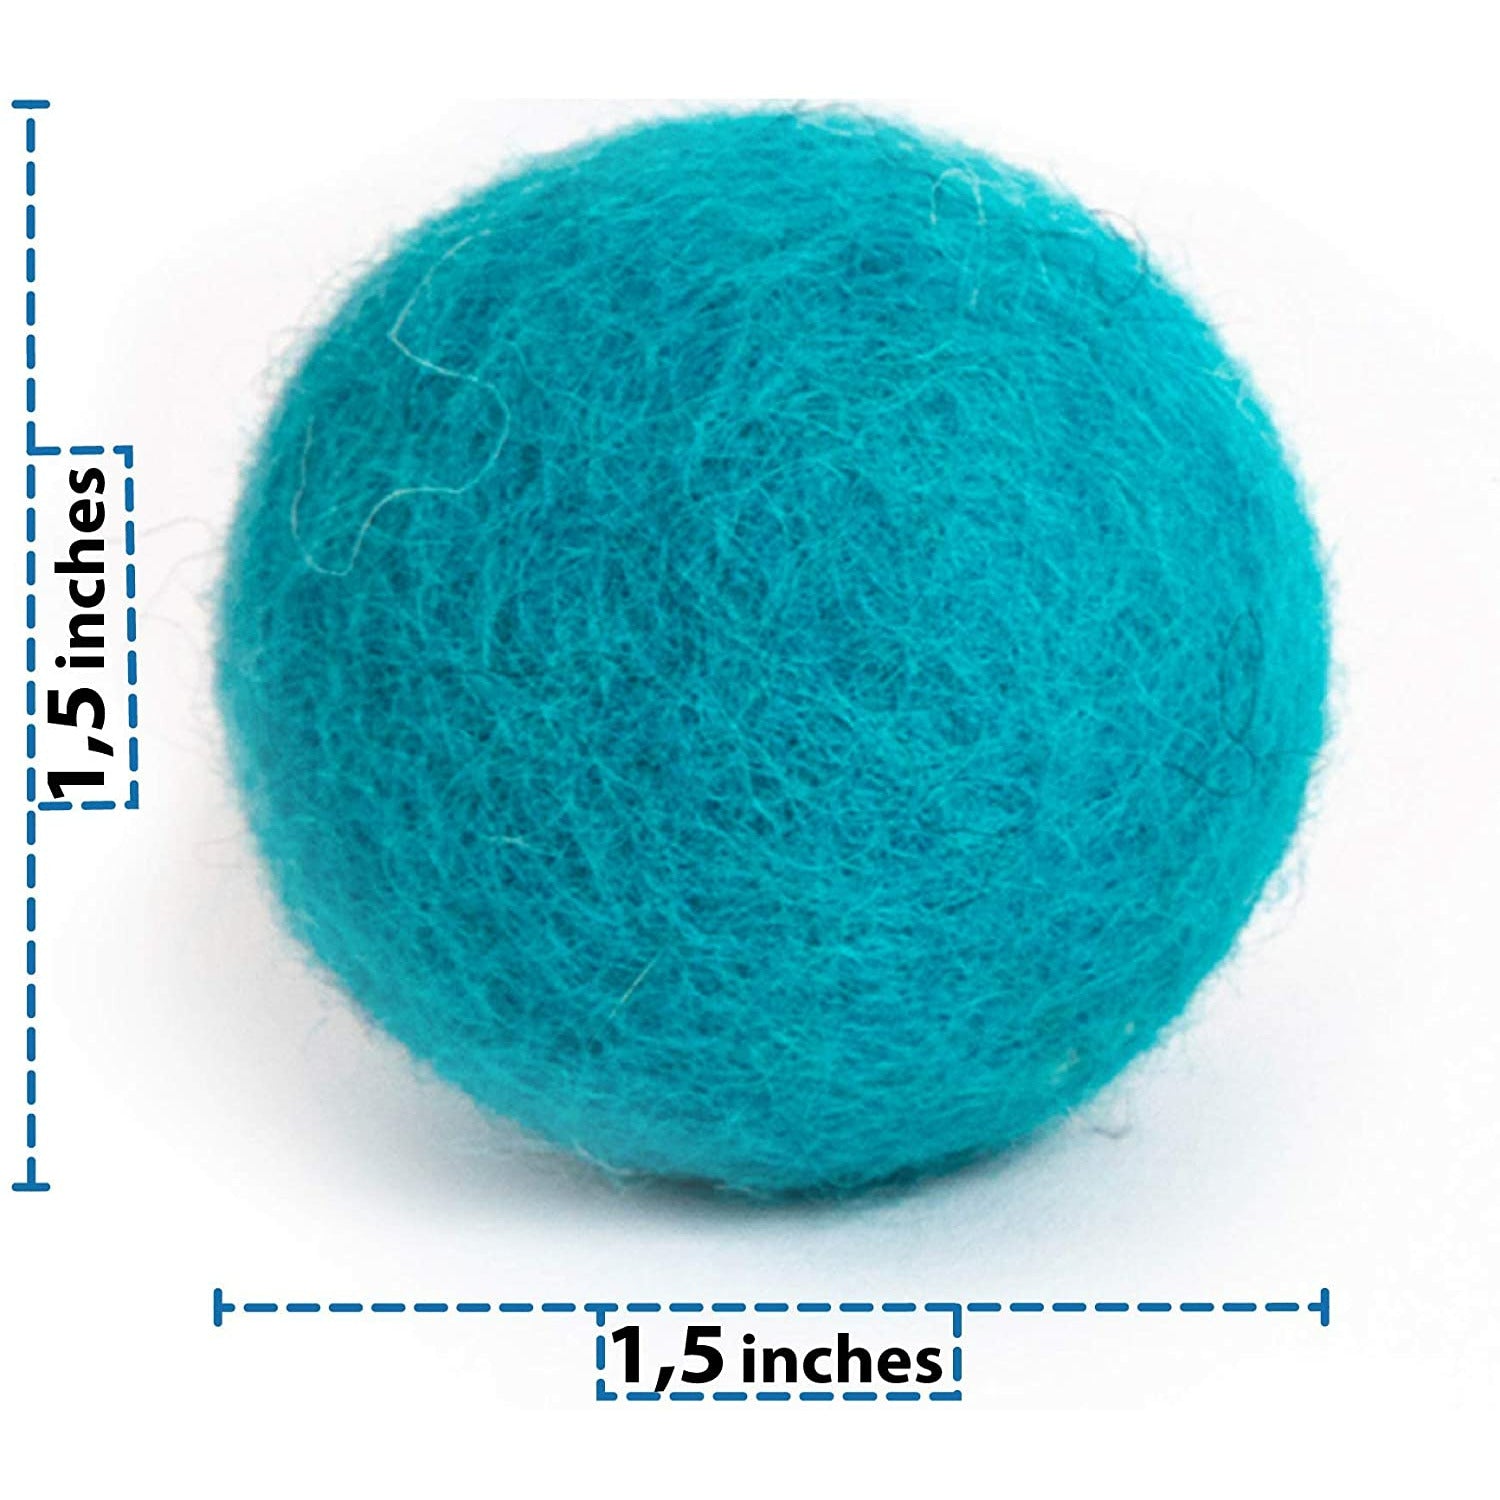 5 Pack of Fuzzy Yarn Balls